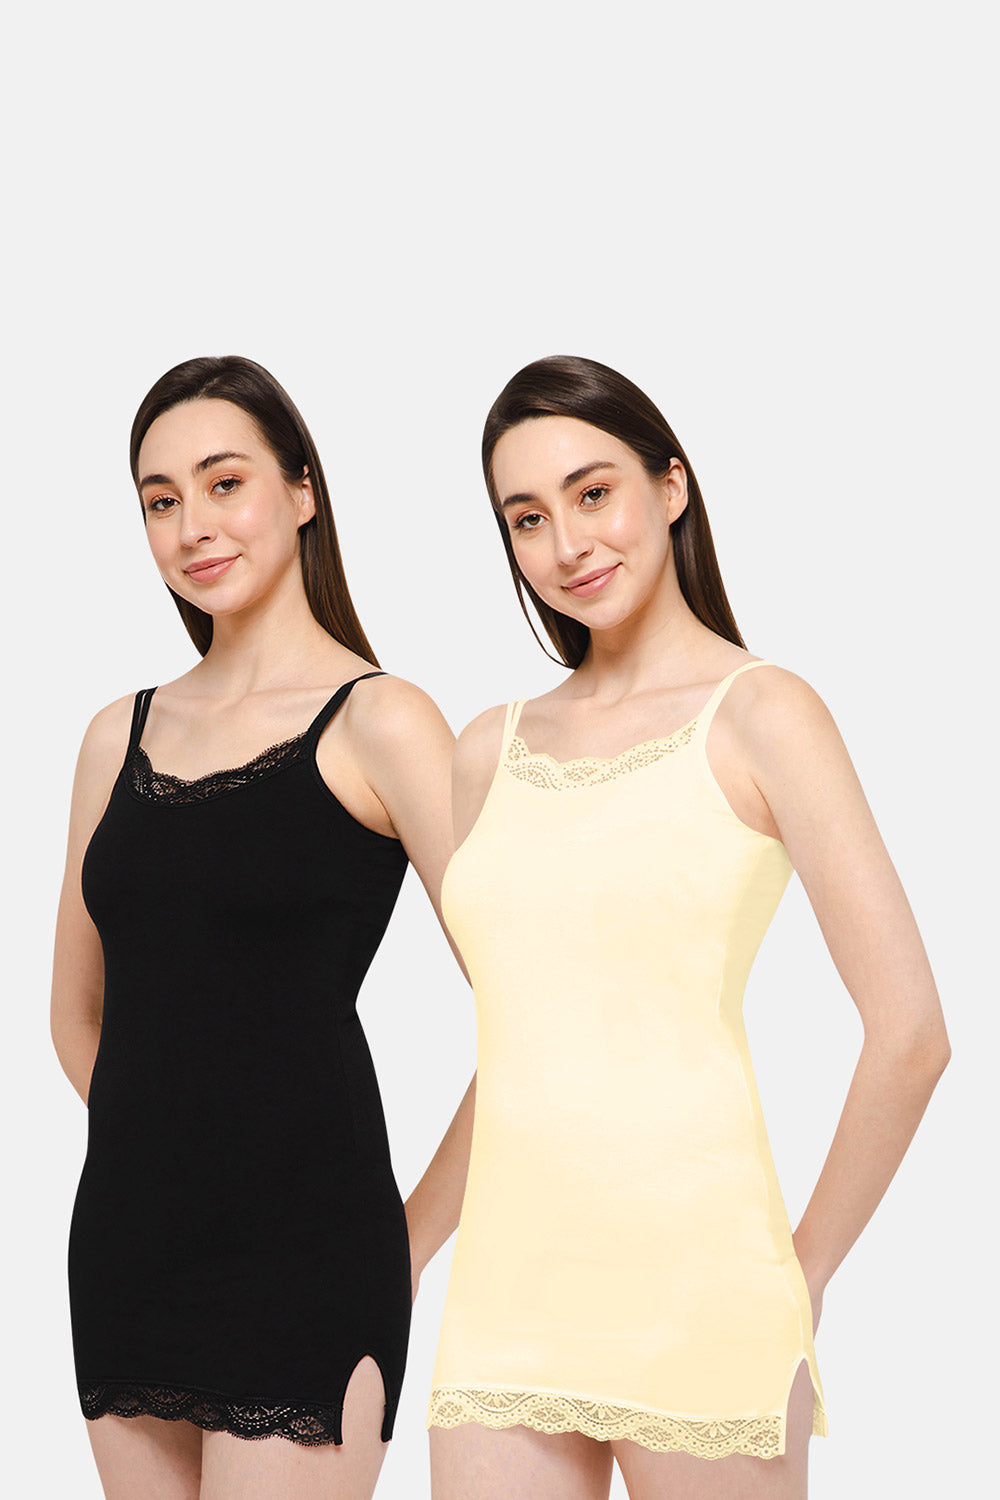 Buy Girls Chemise & Camisoles Online - Innerwear for Kids, 2 PCs Combo  Pack